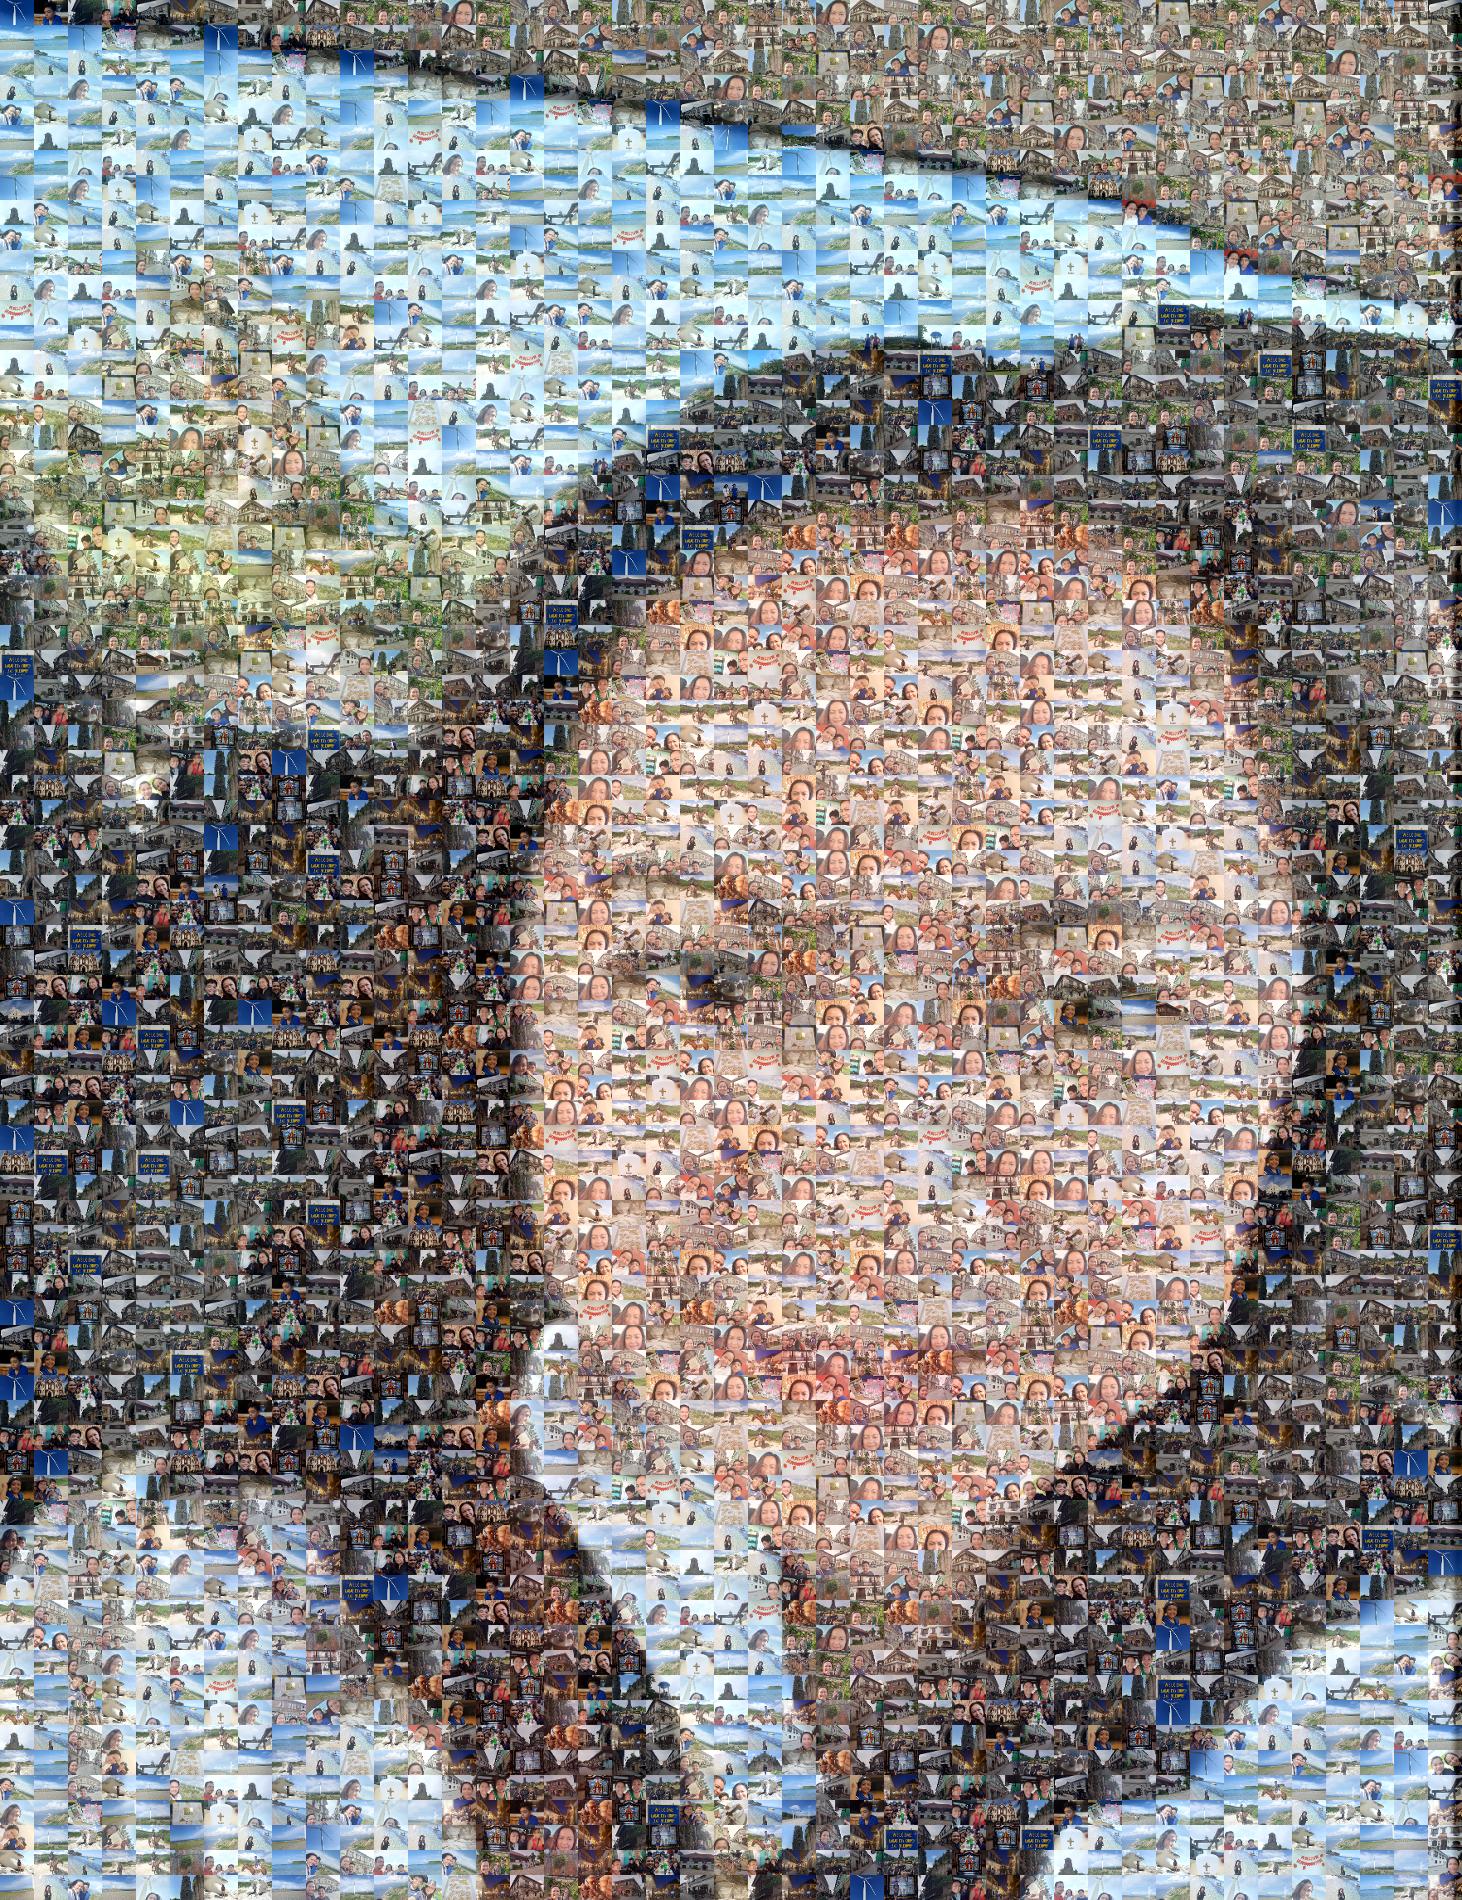 popular photo mosaic